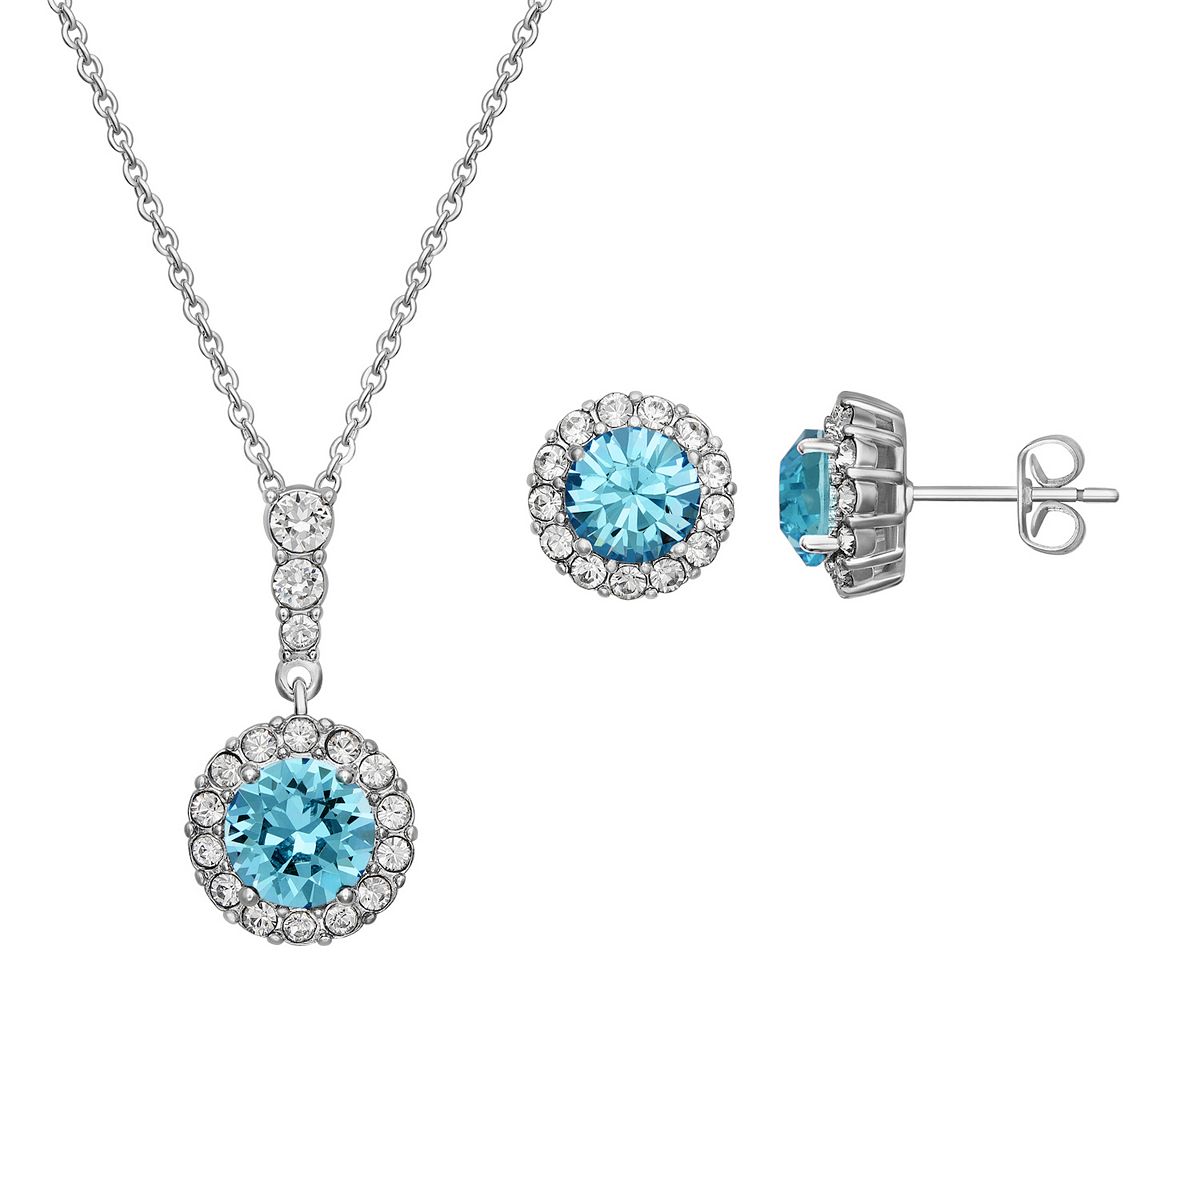 Jewelry Sets at Kohl's: 3-Pcs Brilliance Birthstone Crystal Pendant & Earring Set, 2-Pcs FAO Schwarz Angel Heart Pendant & Earring Set $16 & More + F/S on Orders $49+